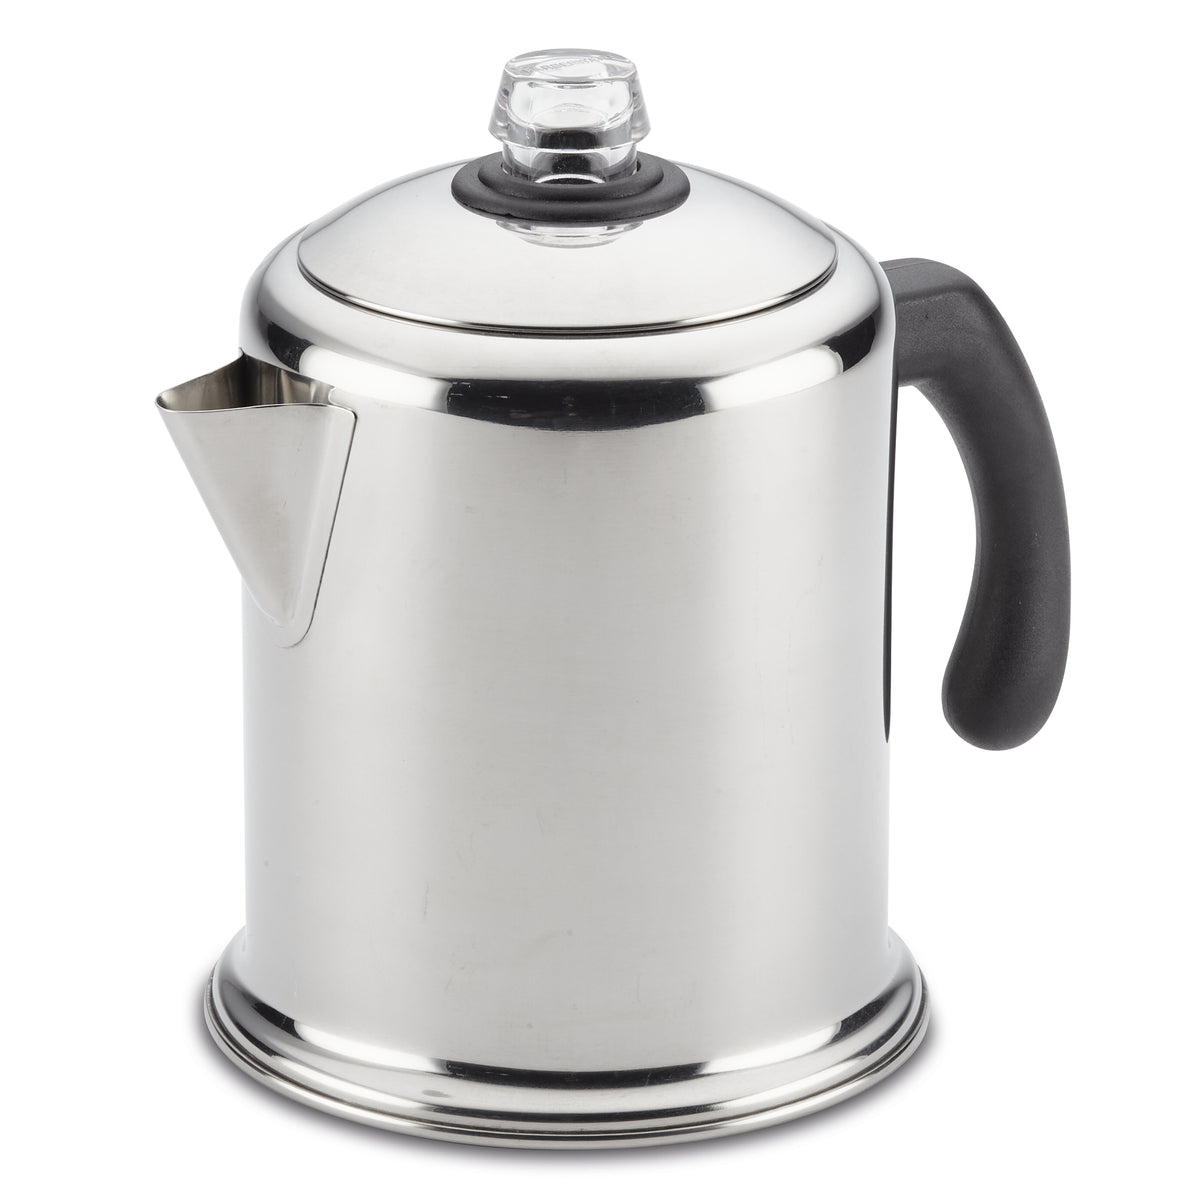 Farberware Stove Top Percolator Coffee Pot Maker Stainless Steel 8-Cup EUC